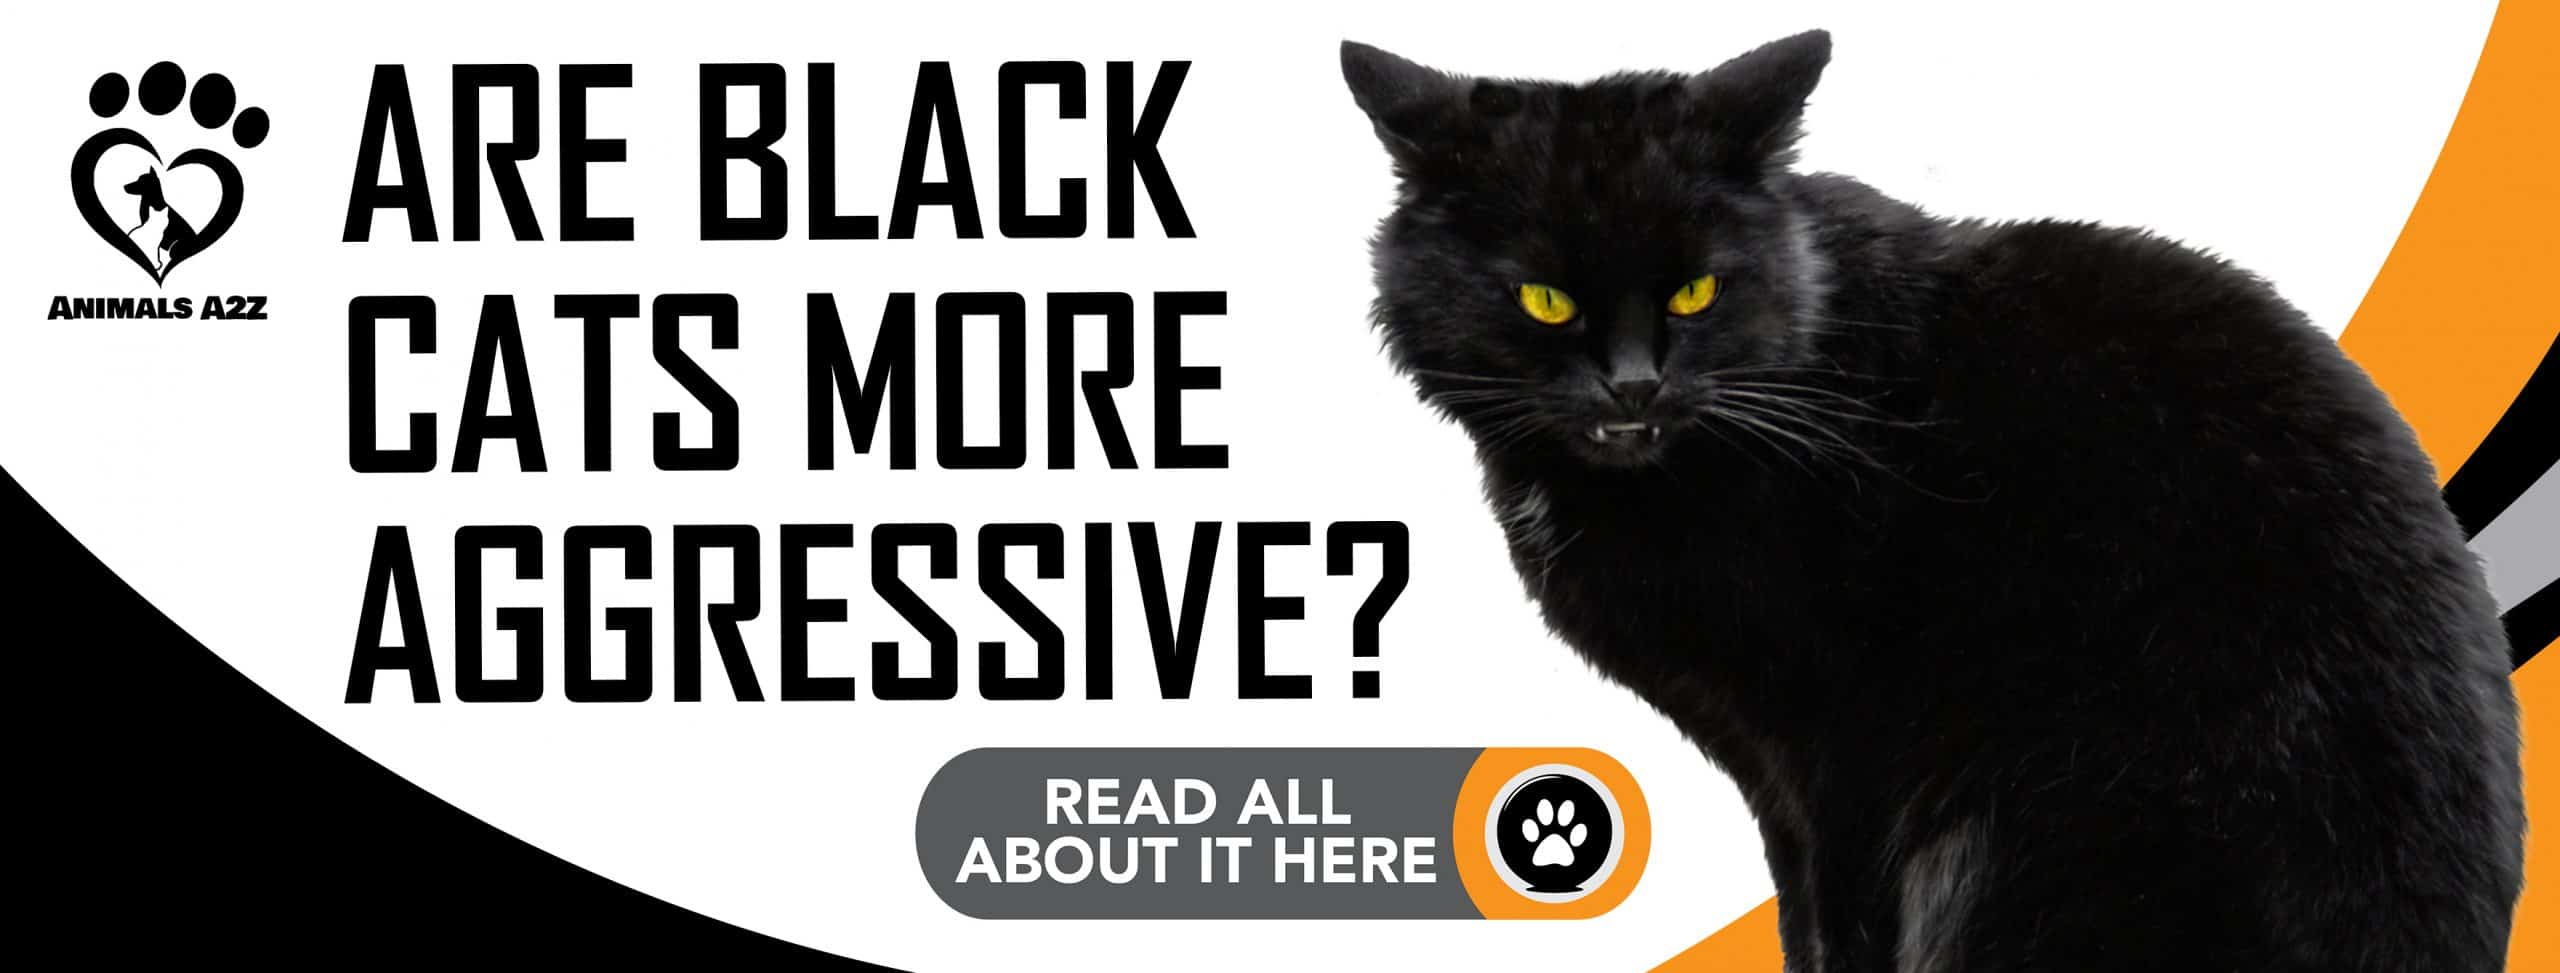 Sind schwarze Katzen aggressiver?